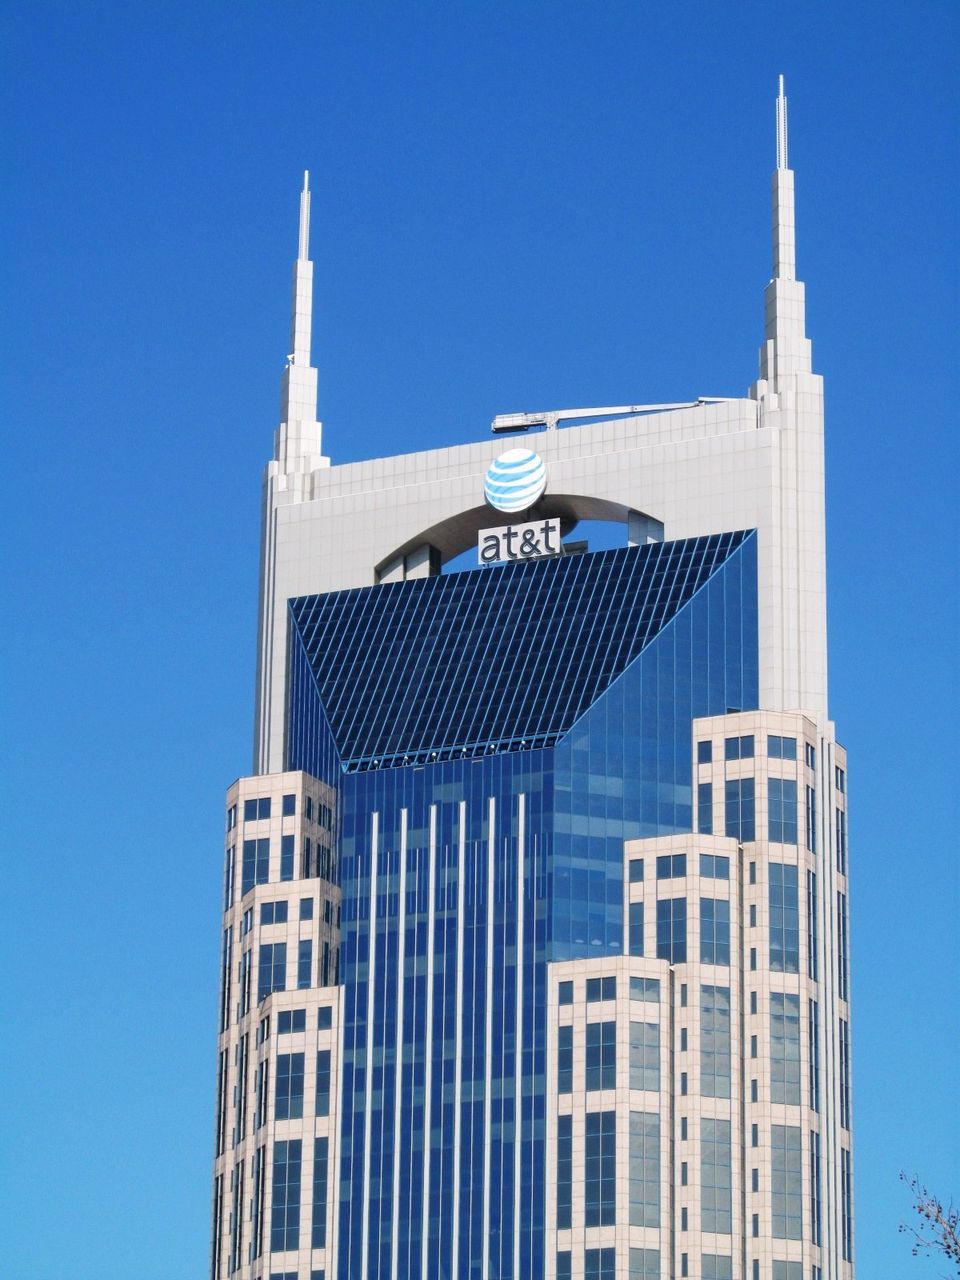 1. Nashville